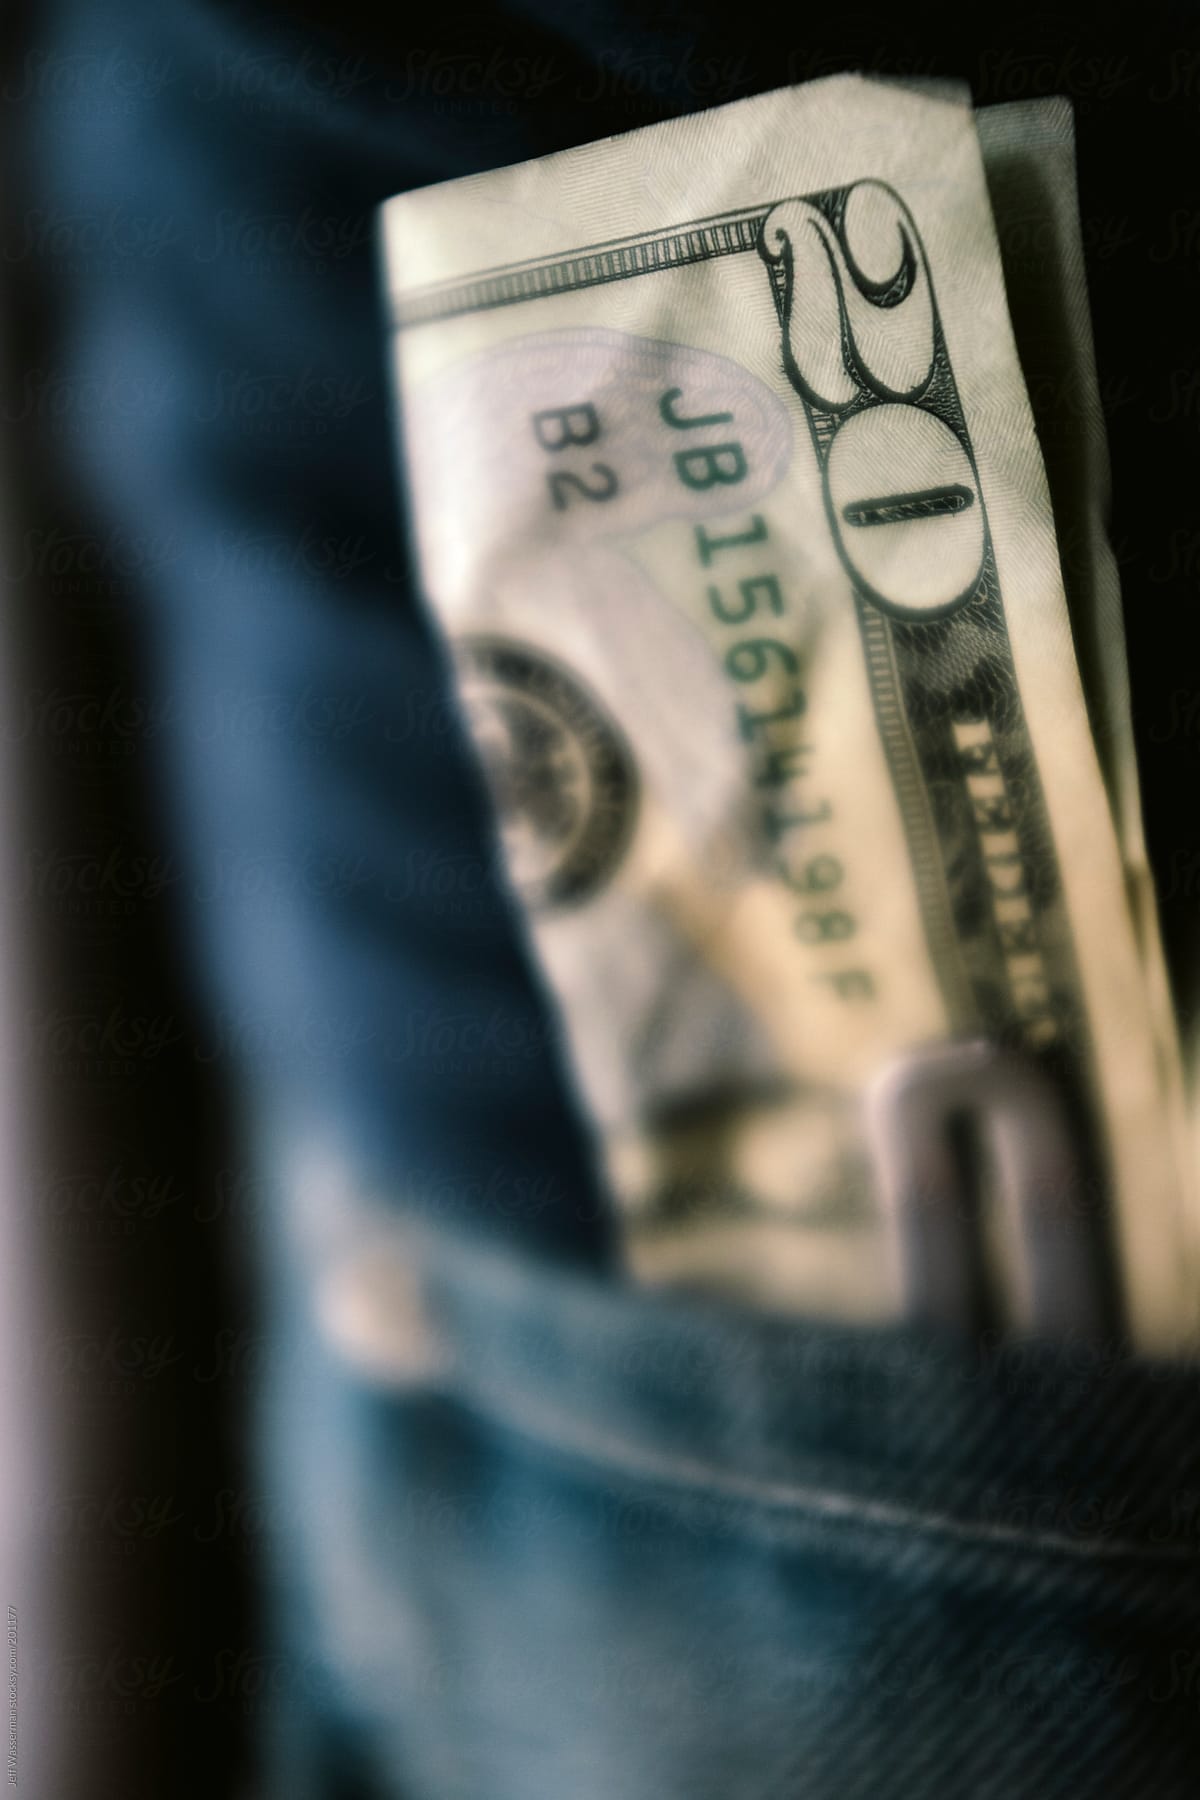 Personal Finance: Twenty Dollar Bill Sticking Out of Pocket